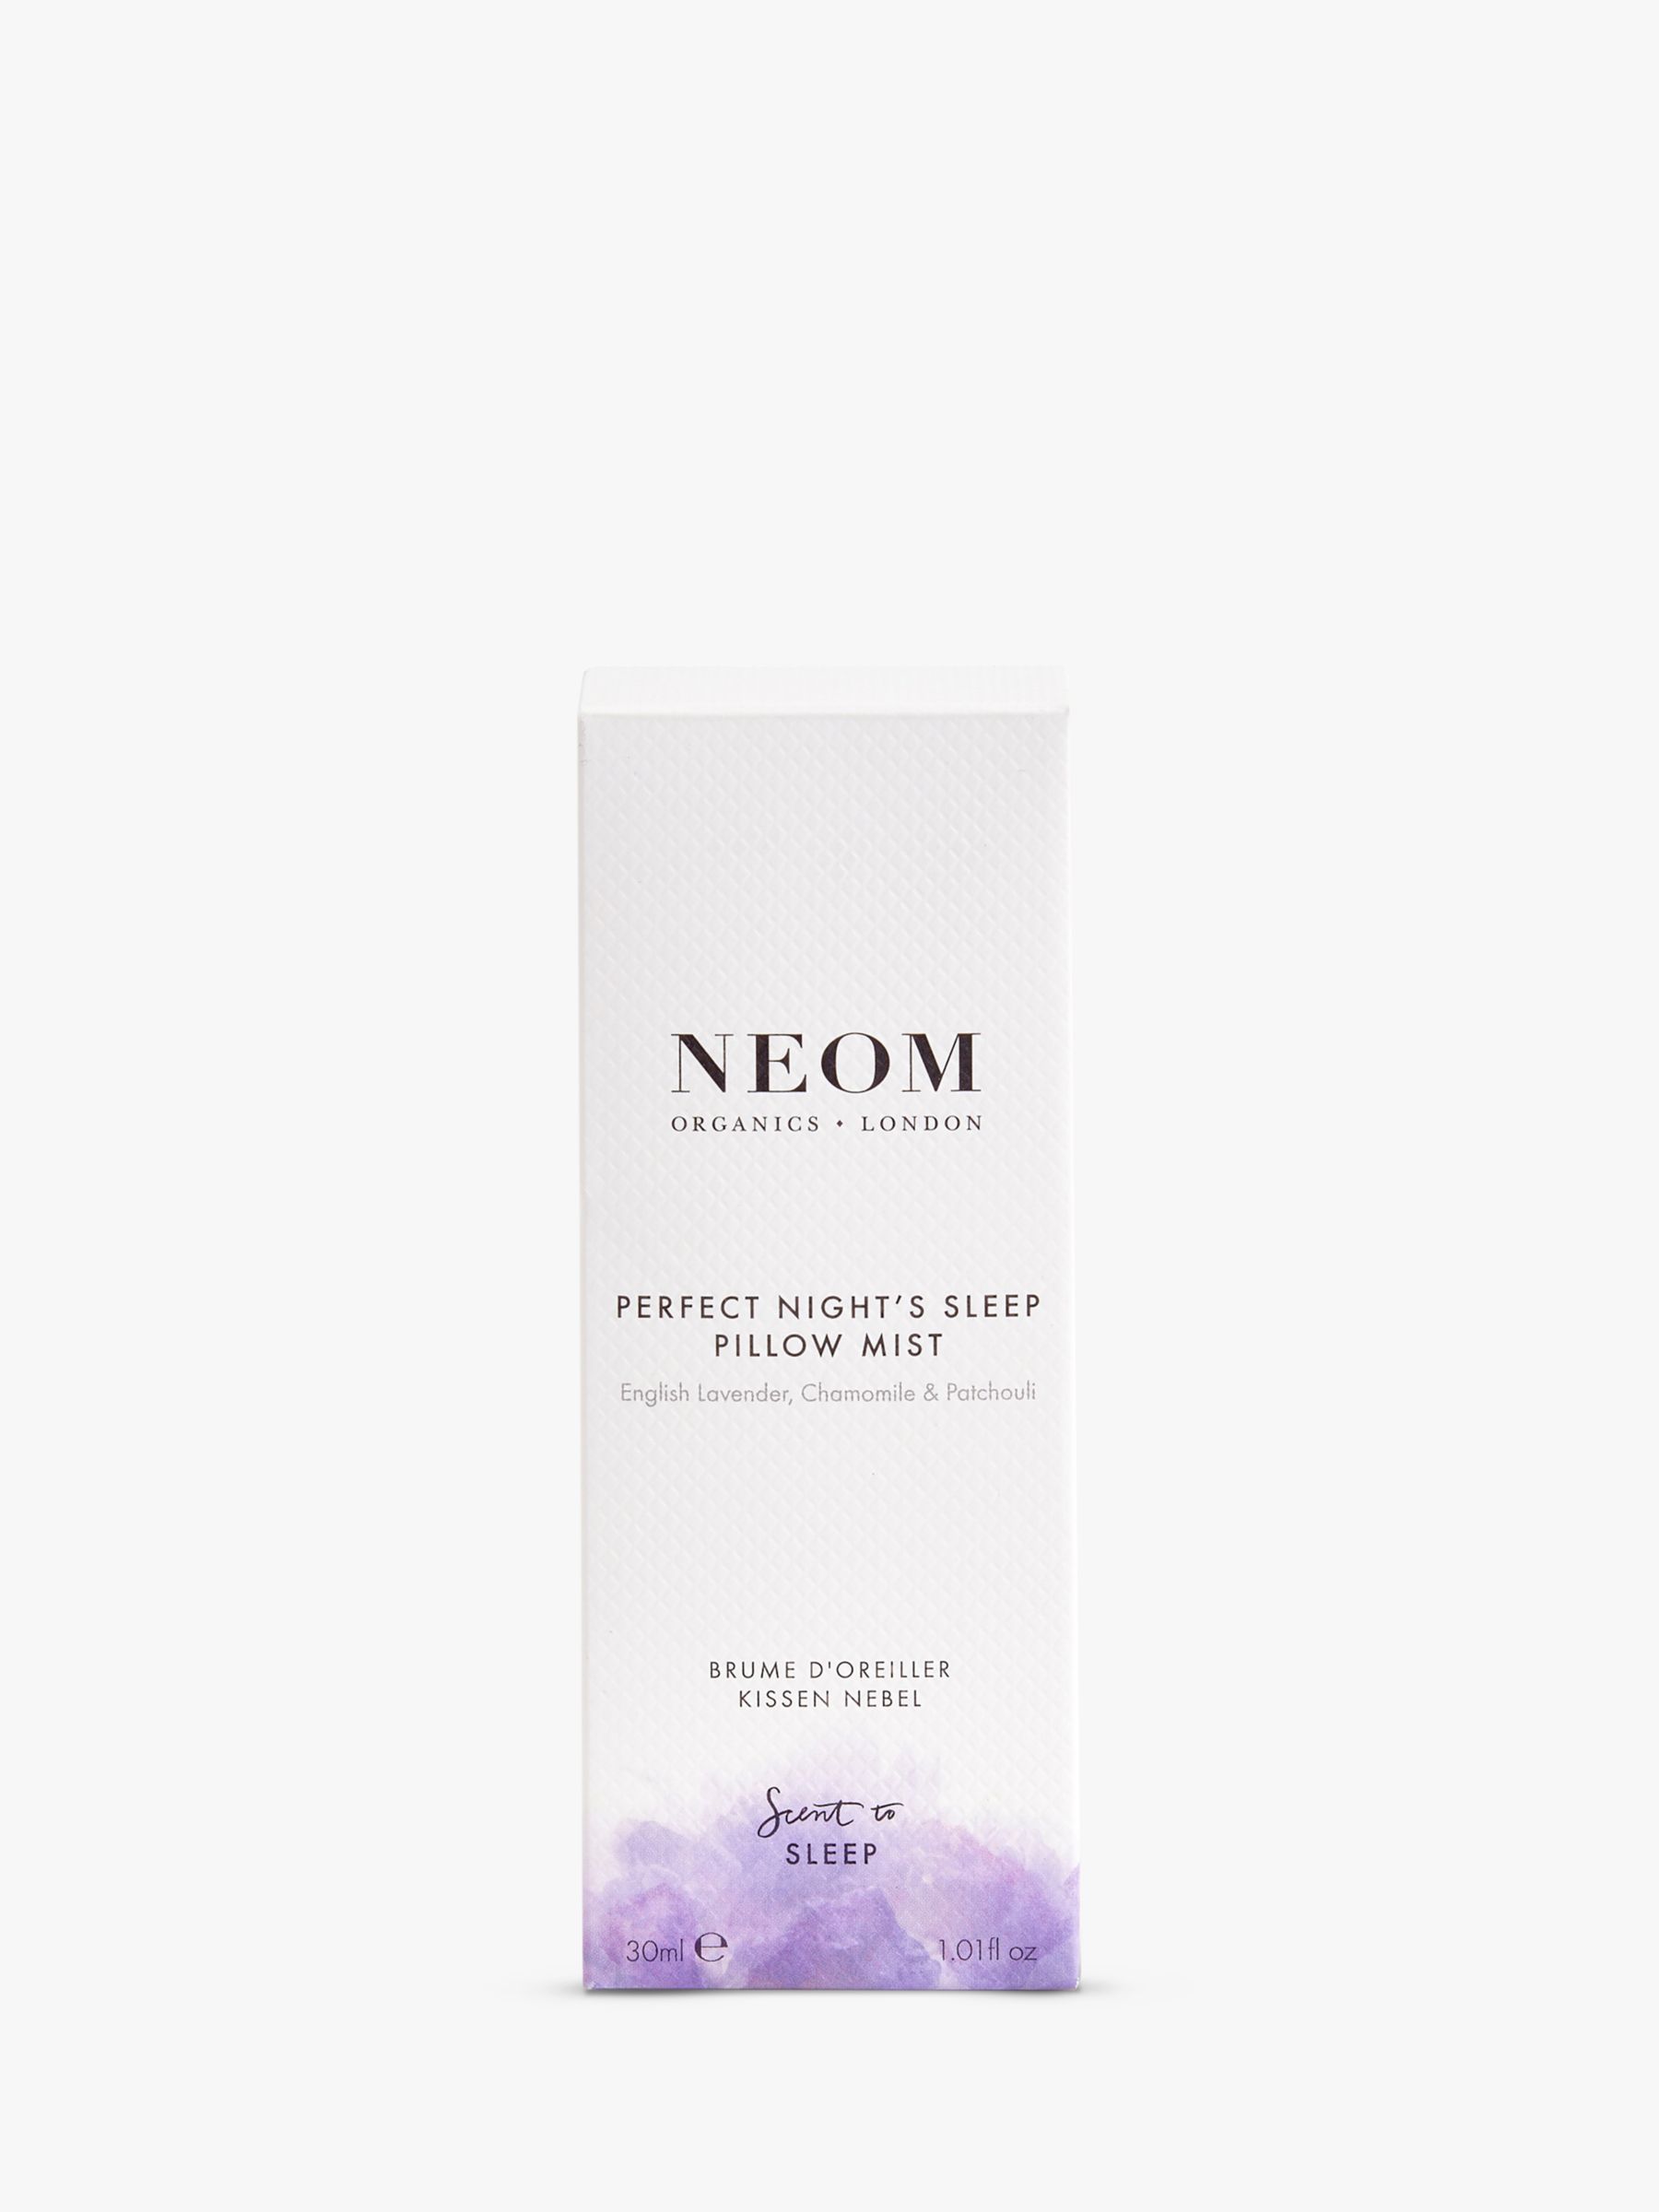 Neom Organics London Perfect Night's Sleep Pillow Mist, 30ml